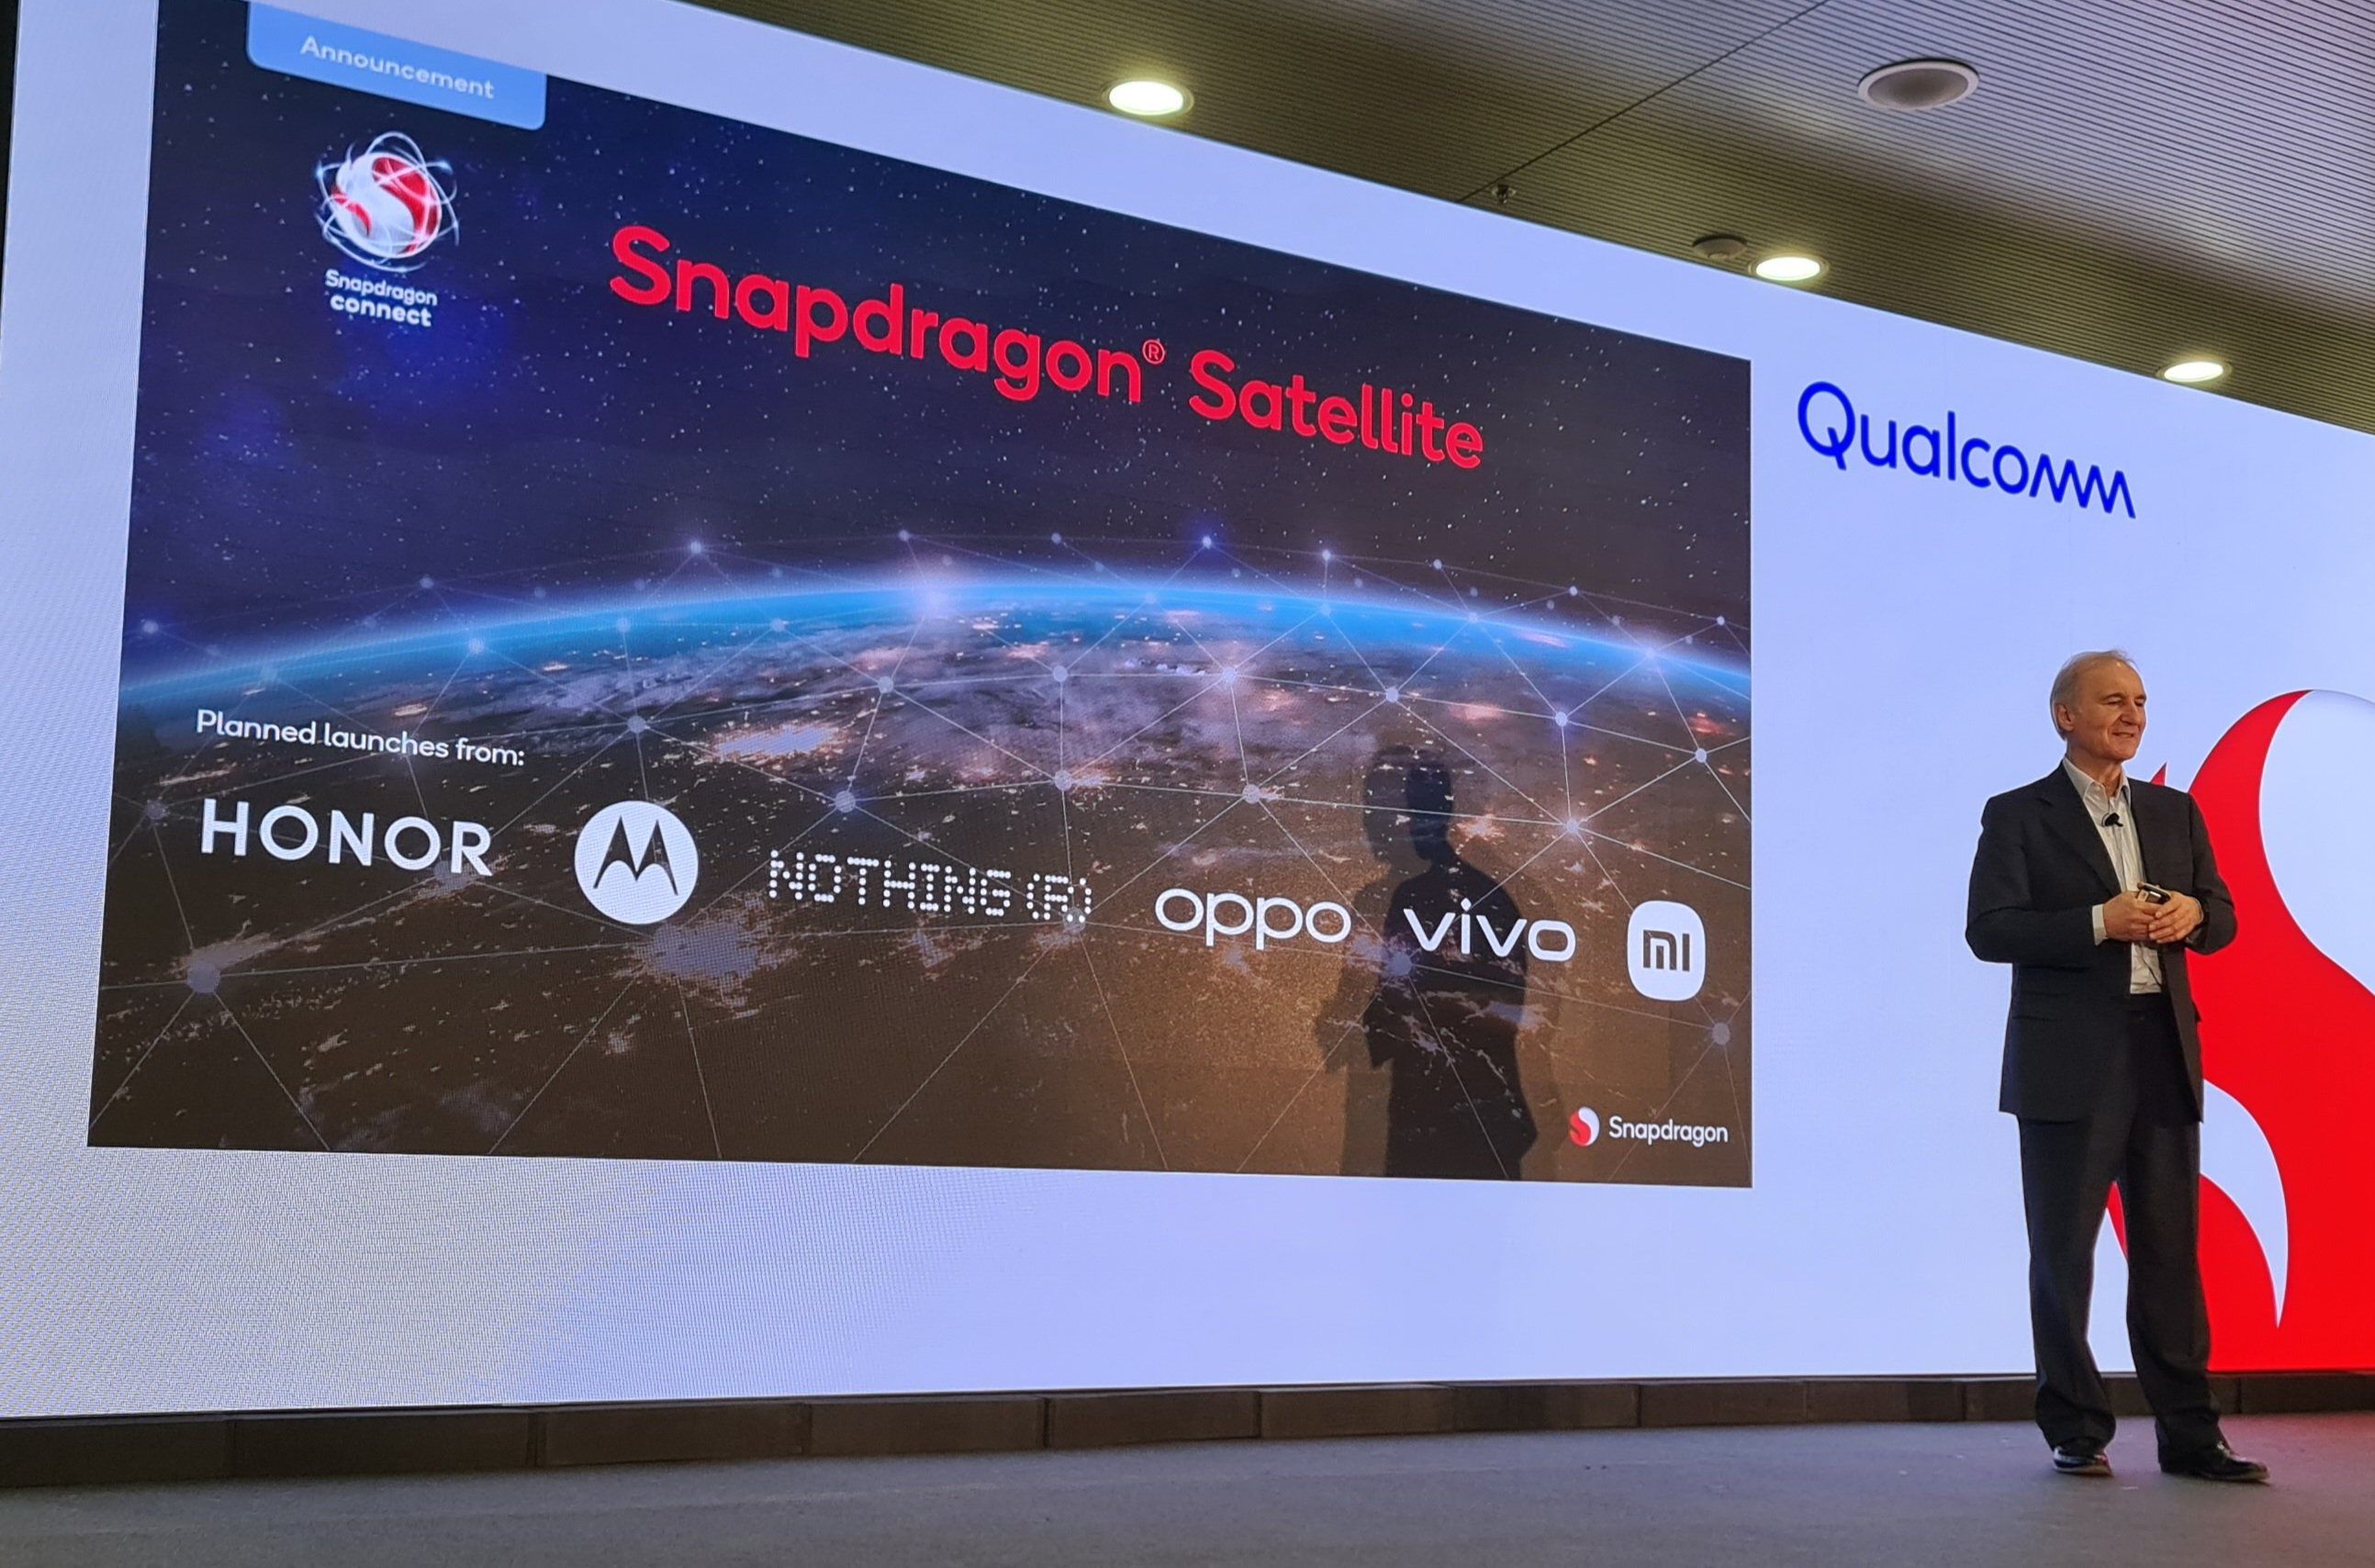 Qualcomm Snapdragon Satellite Nothing Moto OPPO